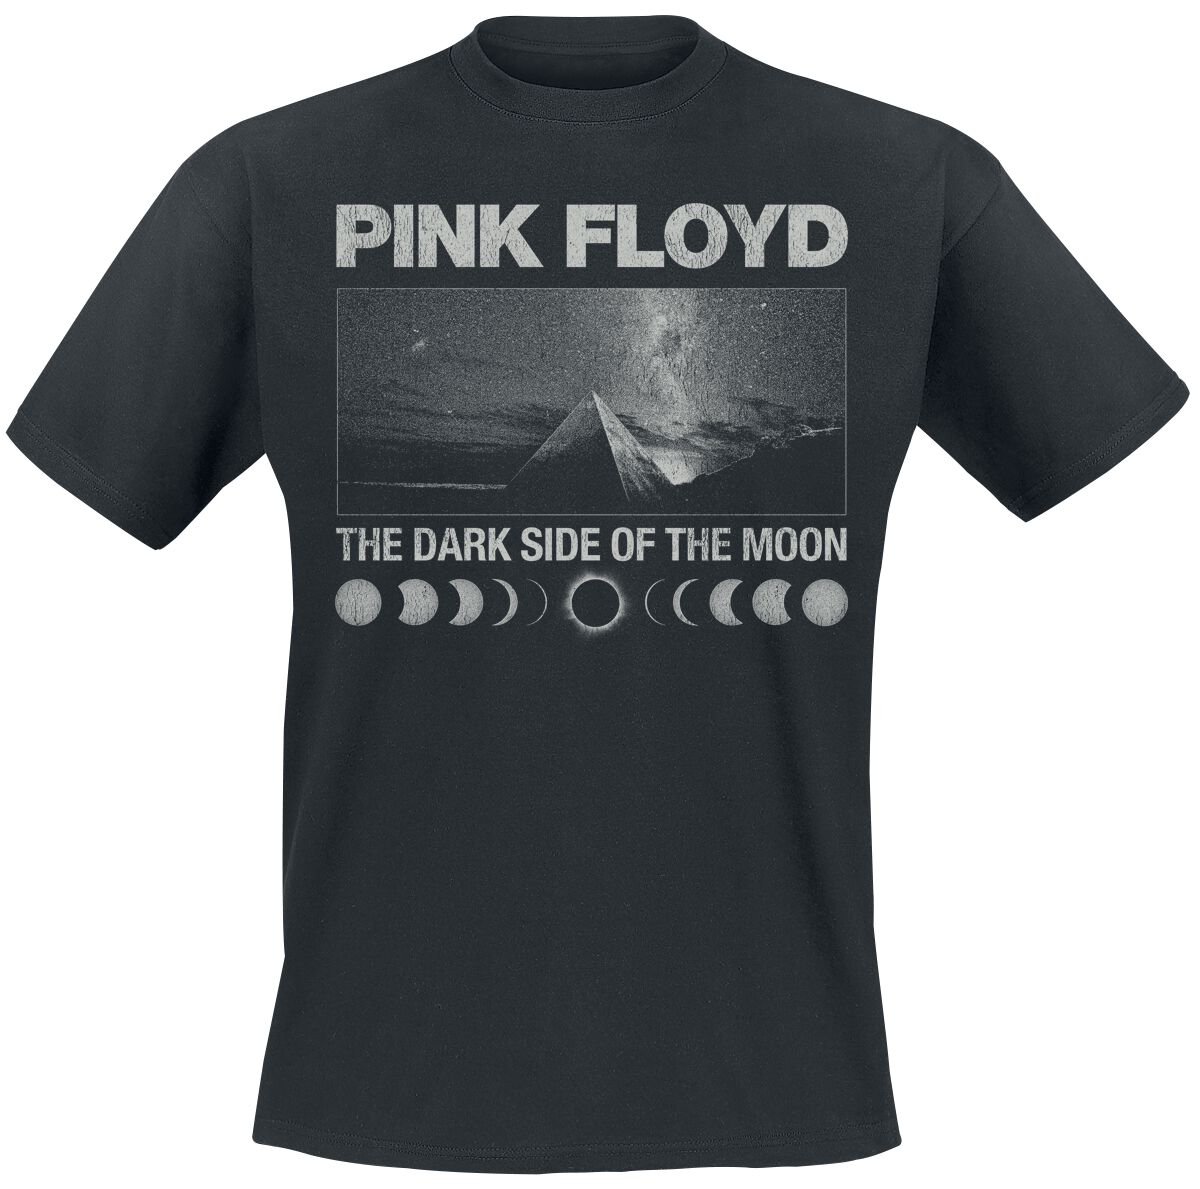 Pink Floyd Vintage Poster T-Shirt schwarz in M